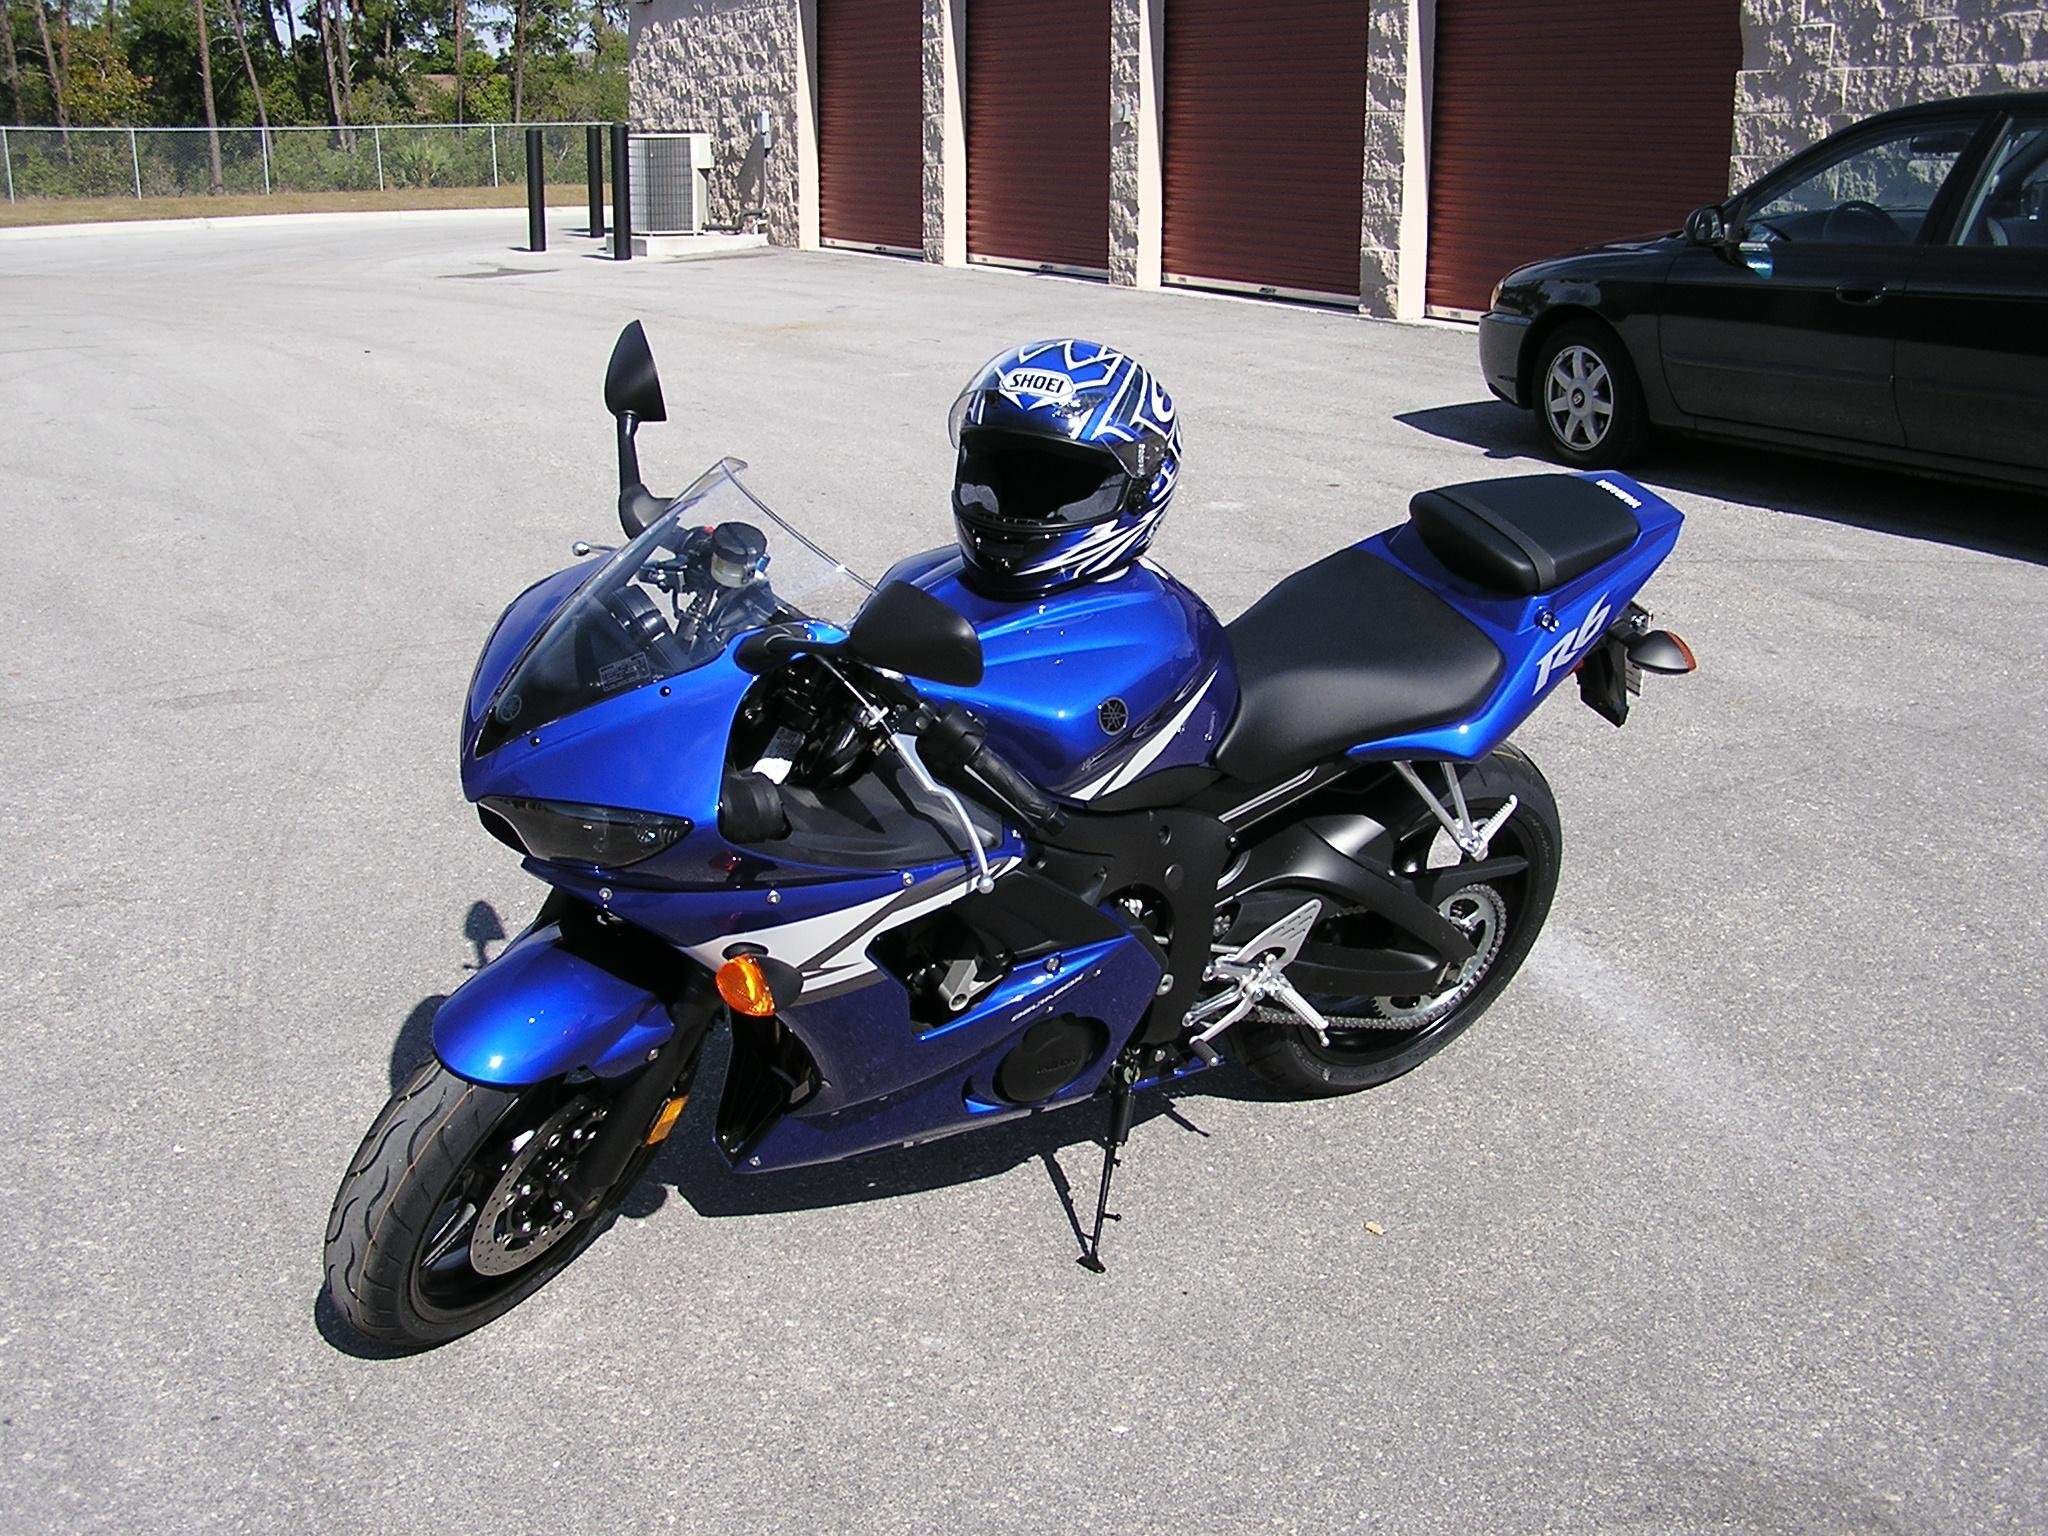 Yamaha r6 2005. Ямаха р6 синий. Yamaha YZF-r6 2005 год. Ямаха р6 2005. Включи байки синие